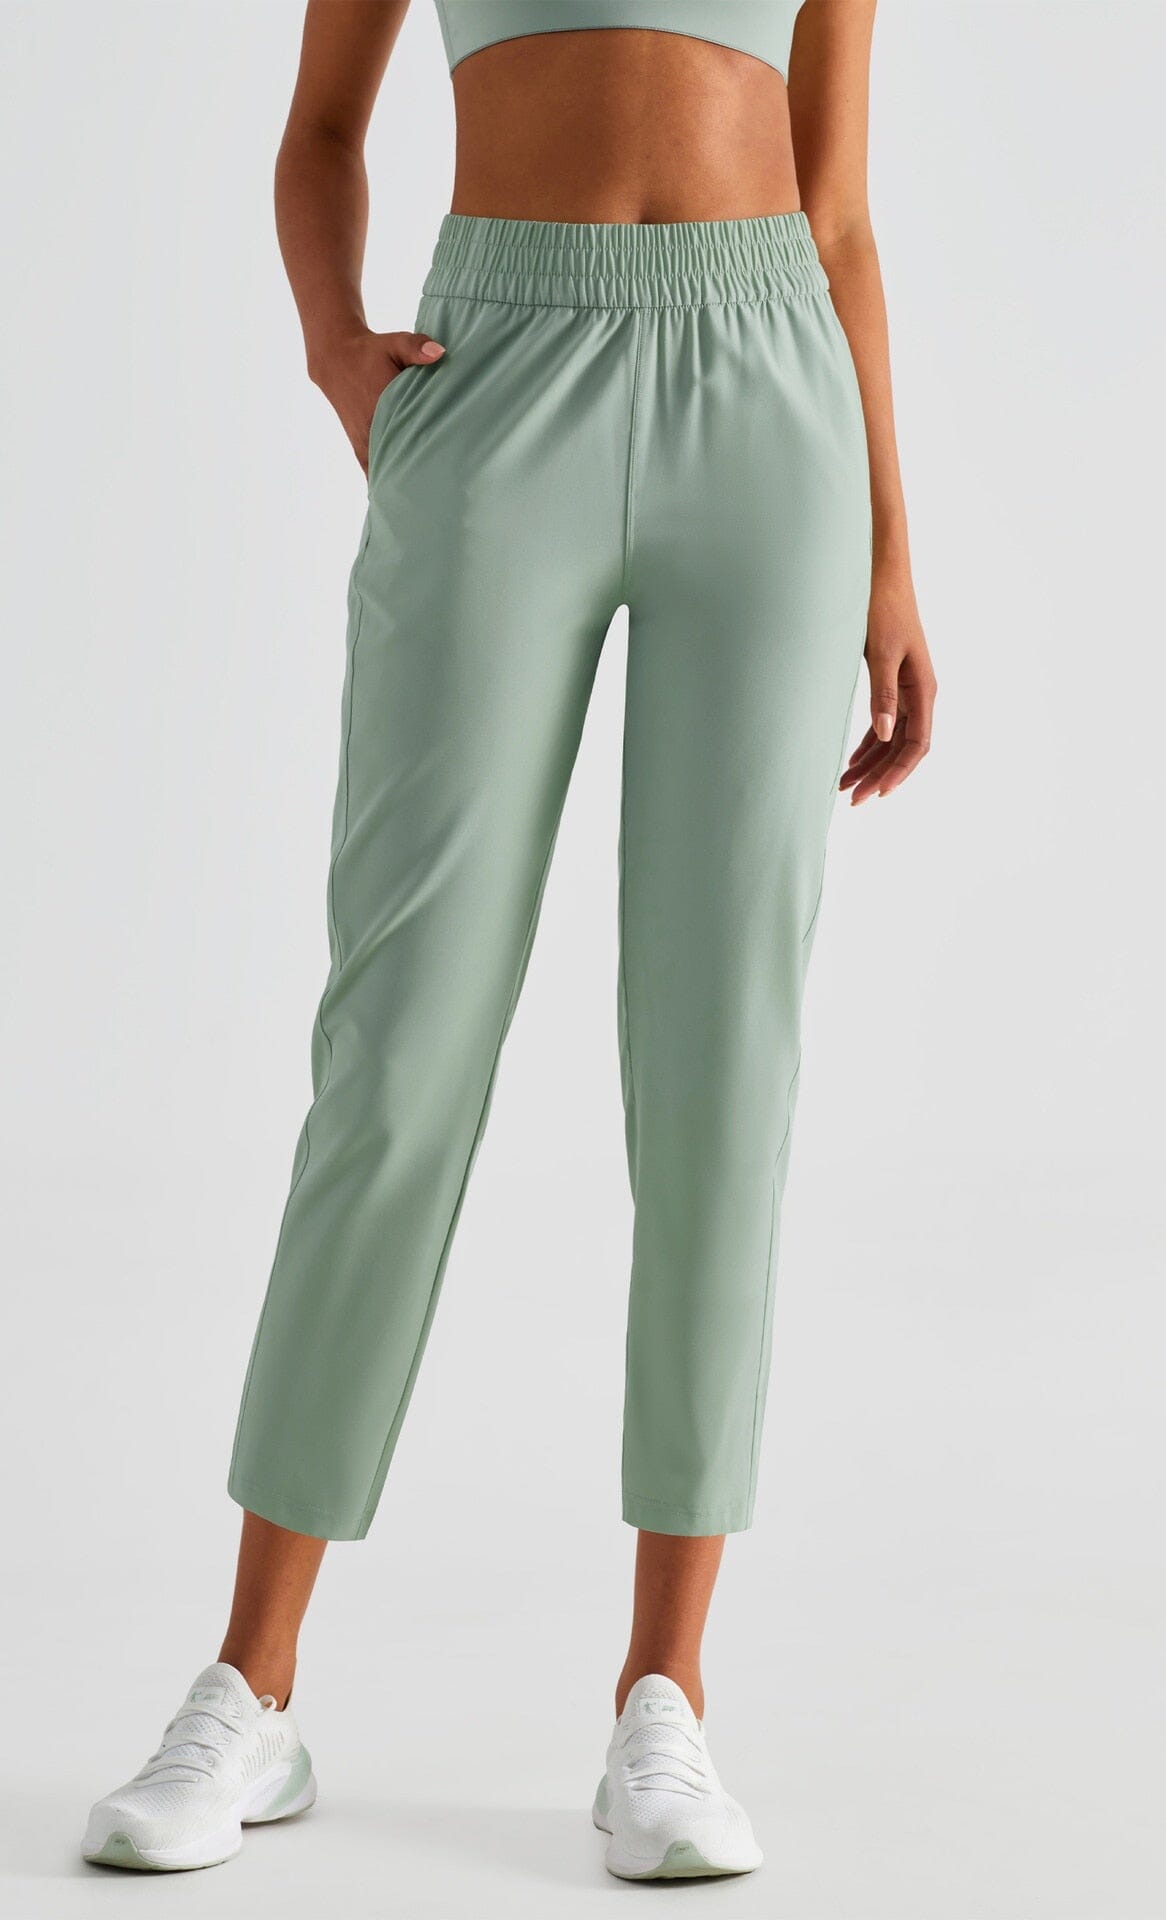 Lustry High Waist Pants Activewear Truetights Green Camphor S 